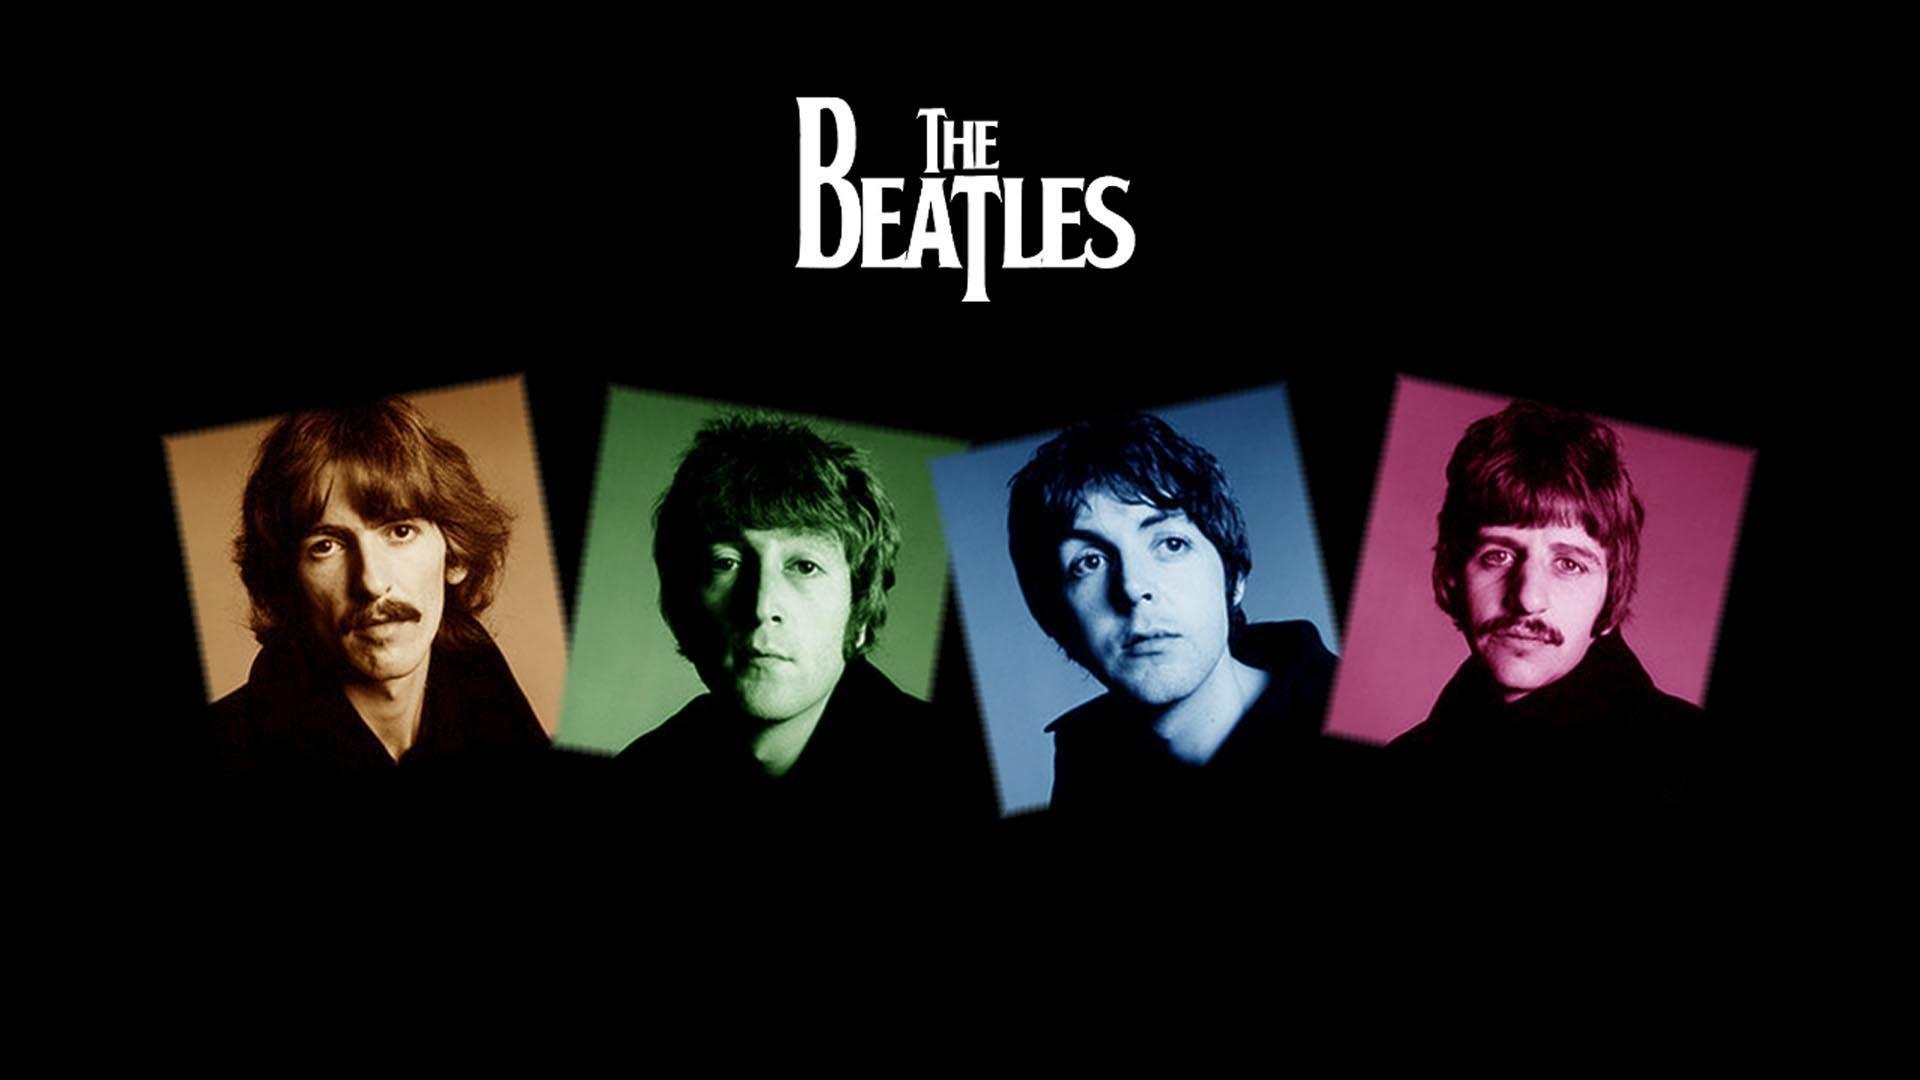 The Beatles 10862 1920x1080 px